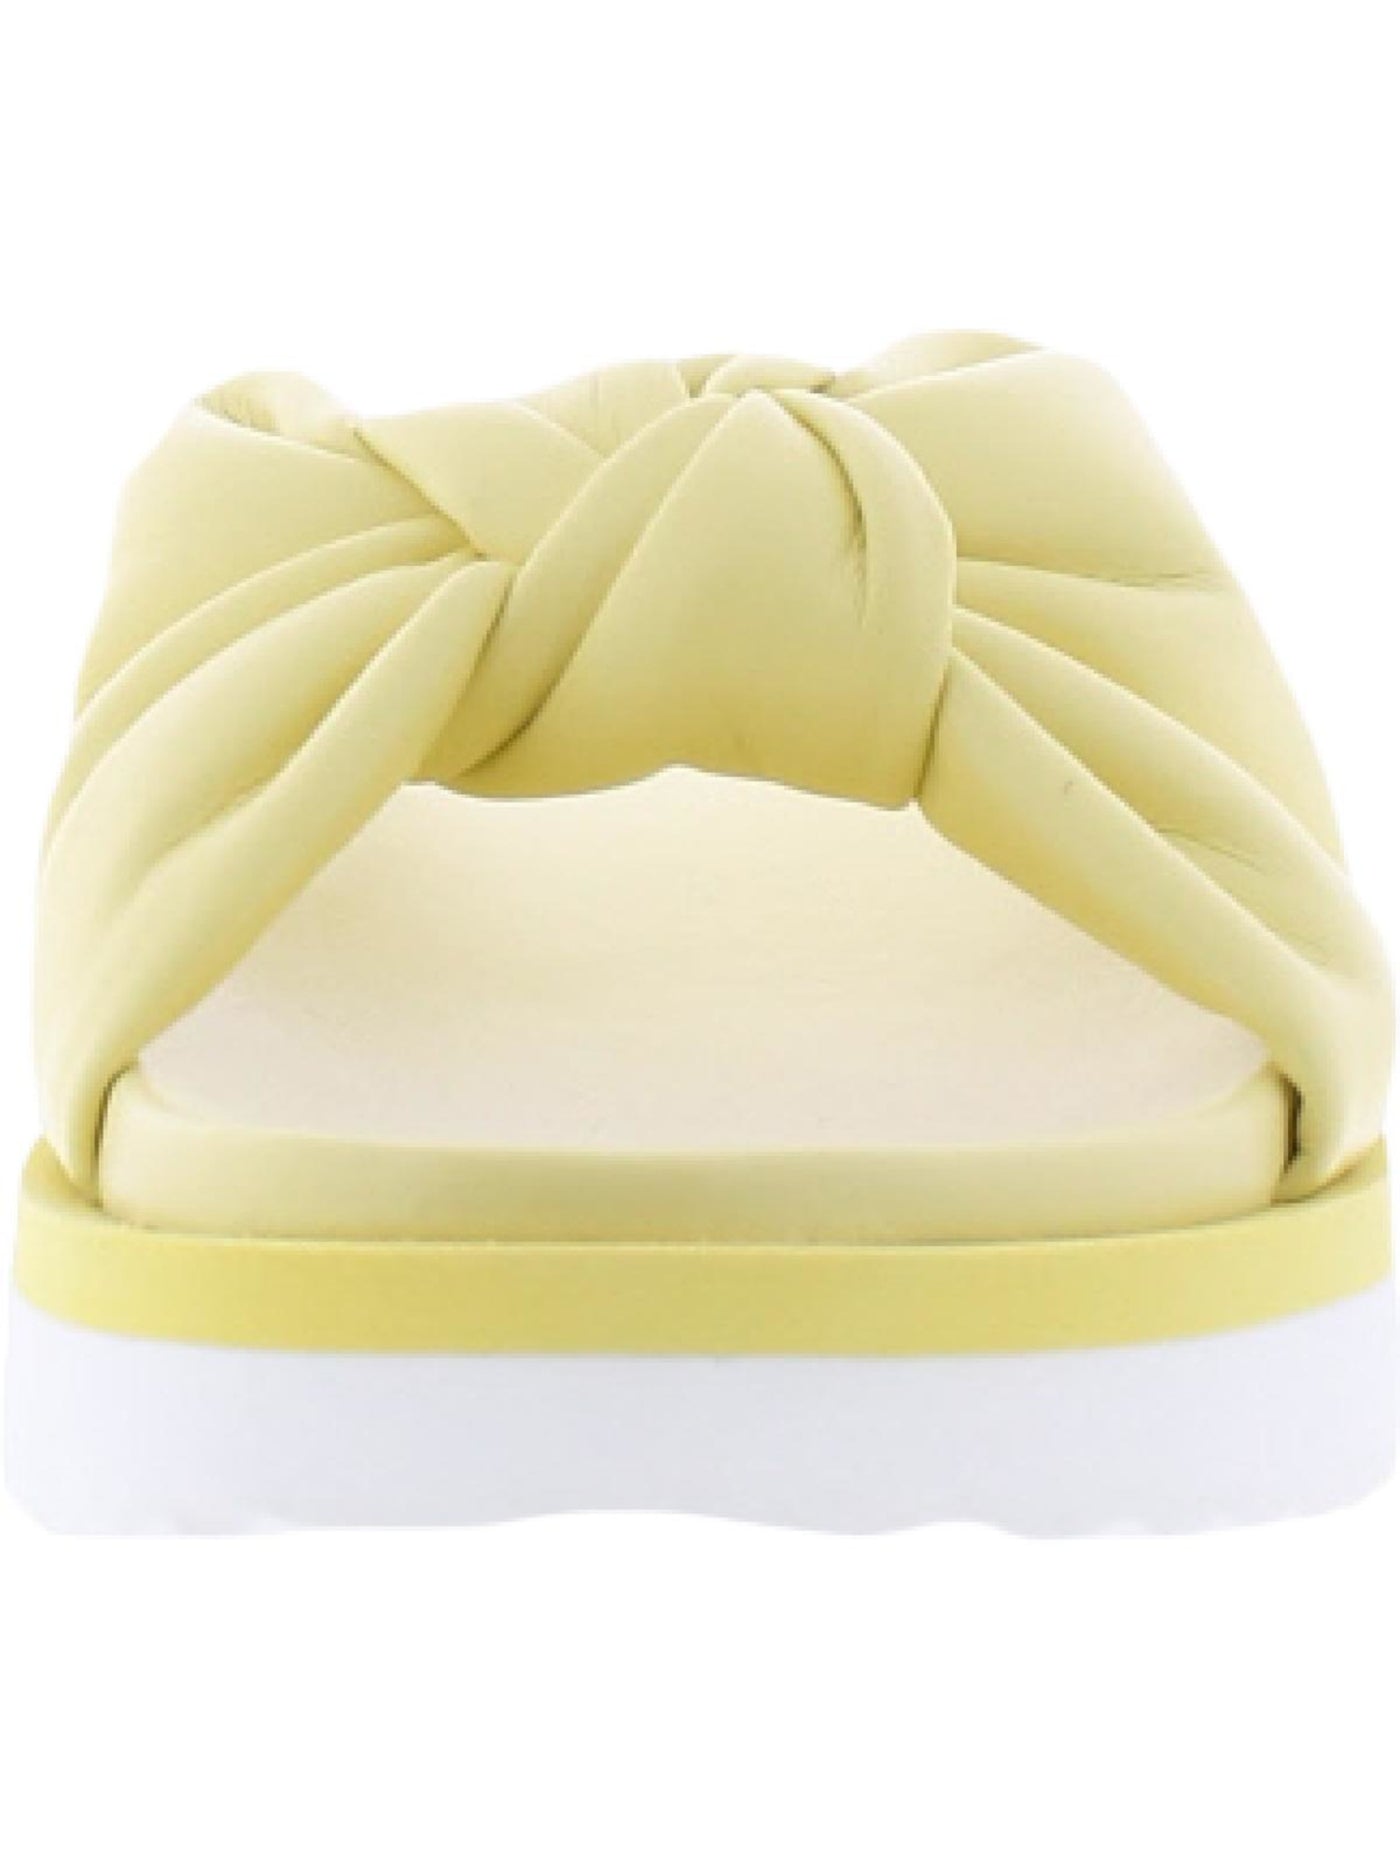 MICHAEL KORS Womens Yellow Knot 1" Platform Comfort Josie Round Toe Wedge Slip On Slide Sandals Shoes 6 M